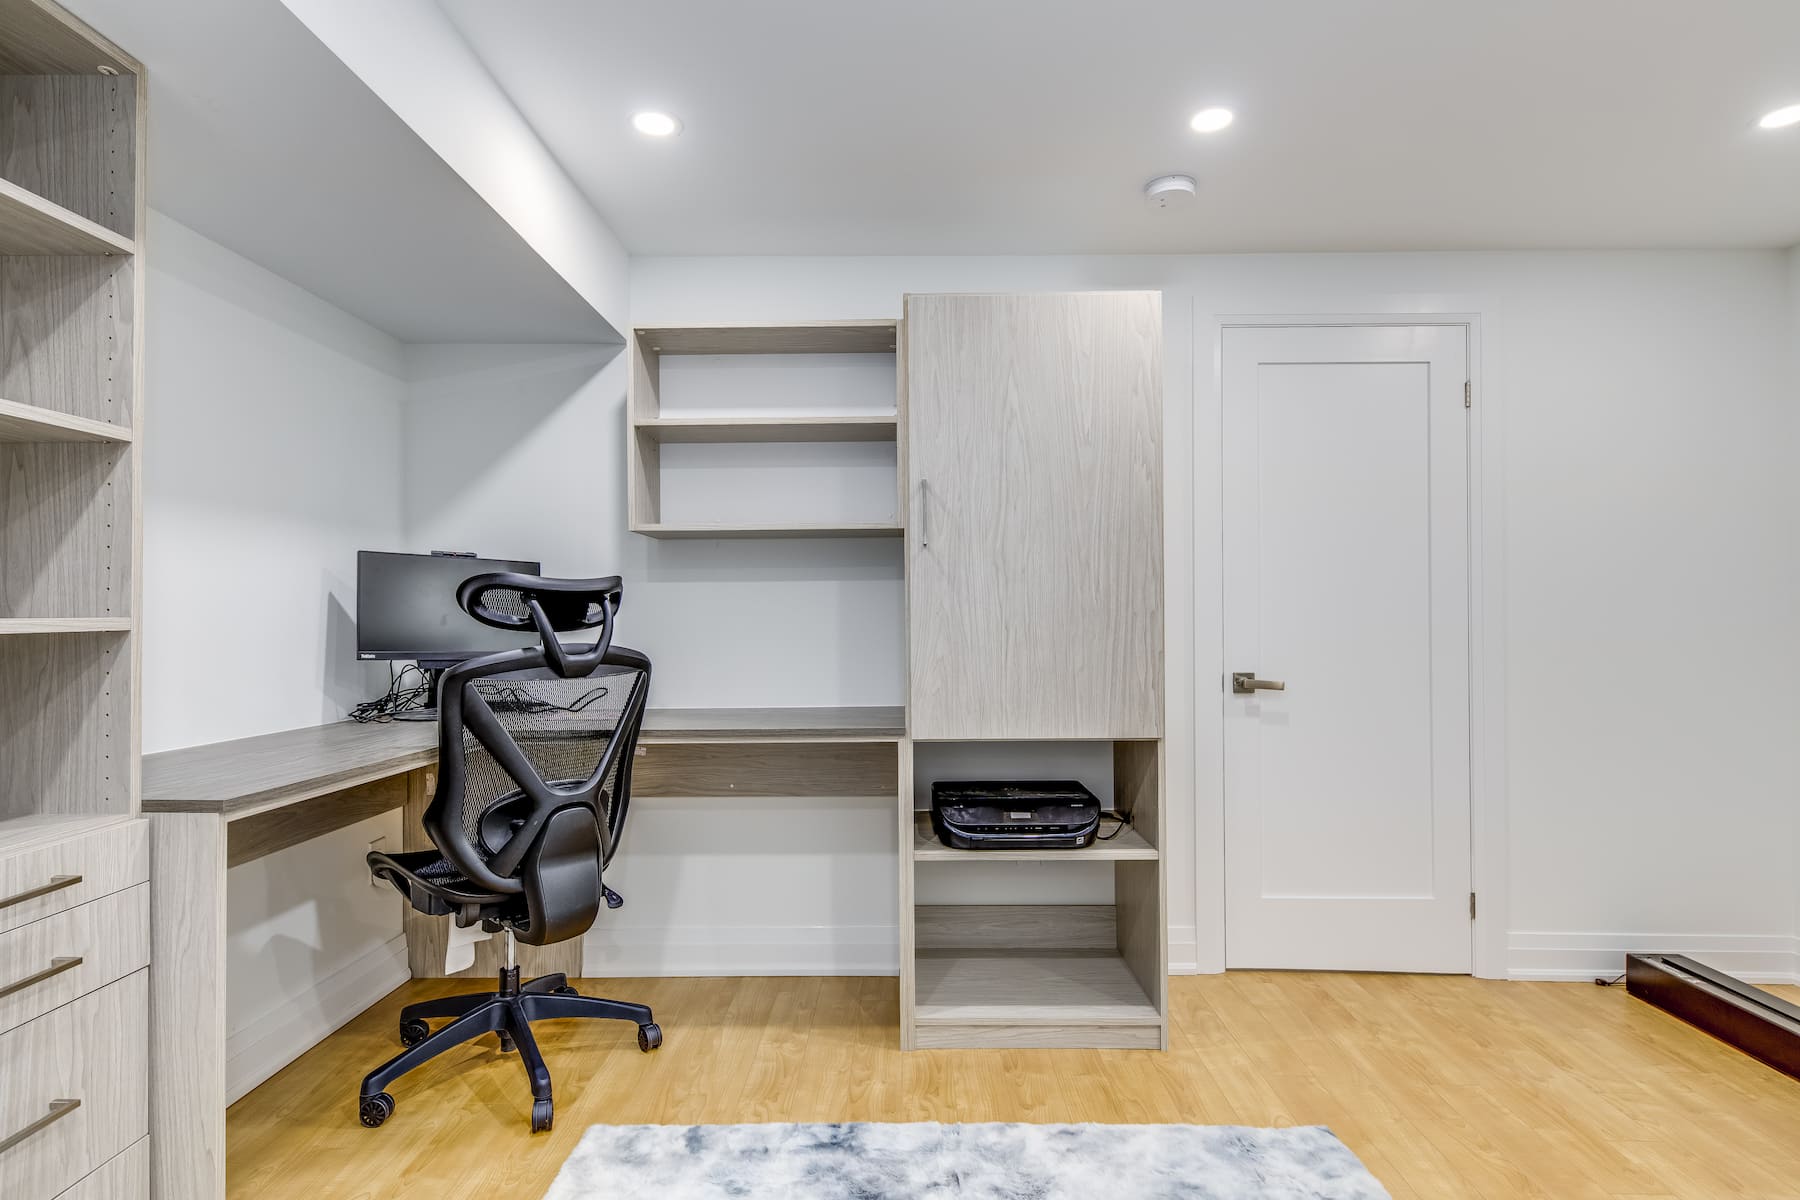 Basement renovation home office ideas Toronto